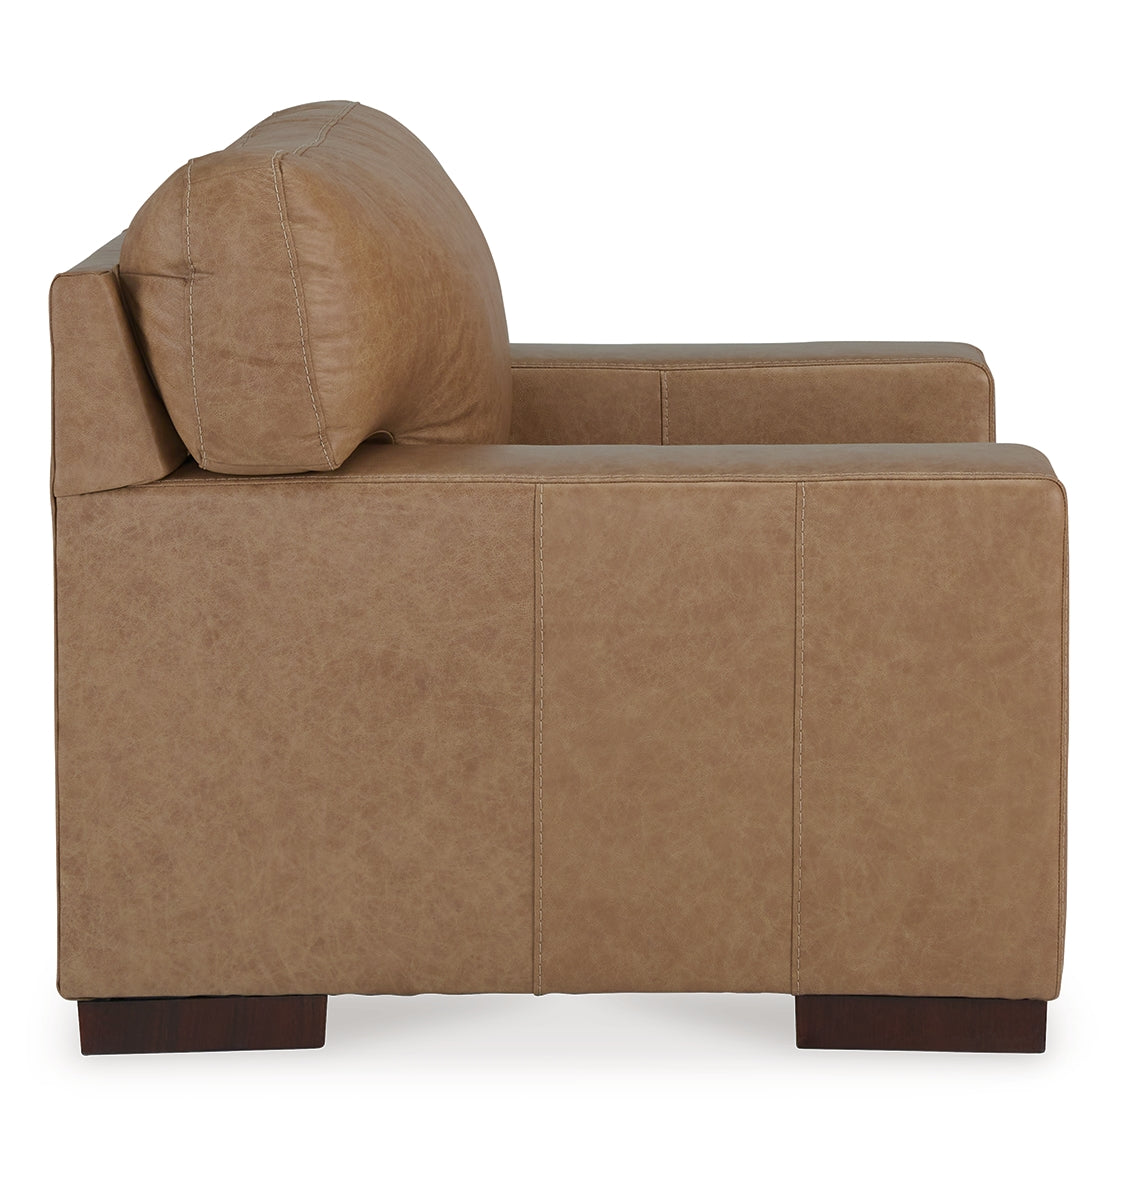 Lombardia Sofa, Loveseat, Chair and Ottoman